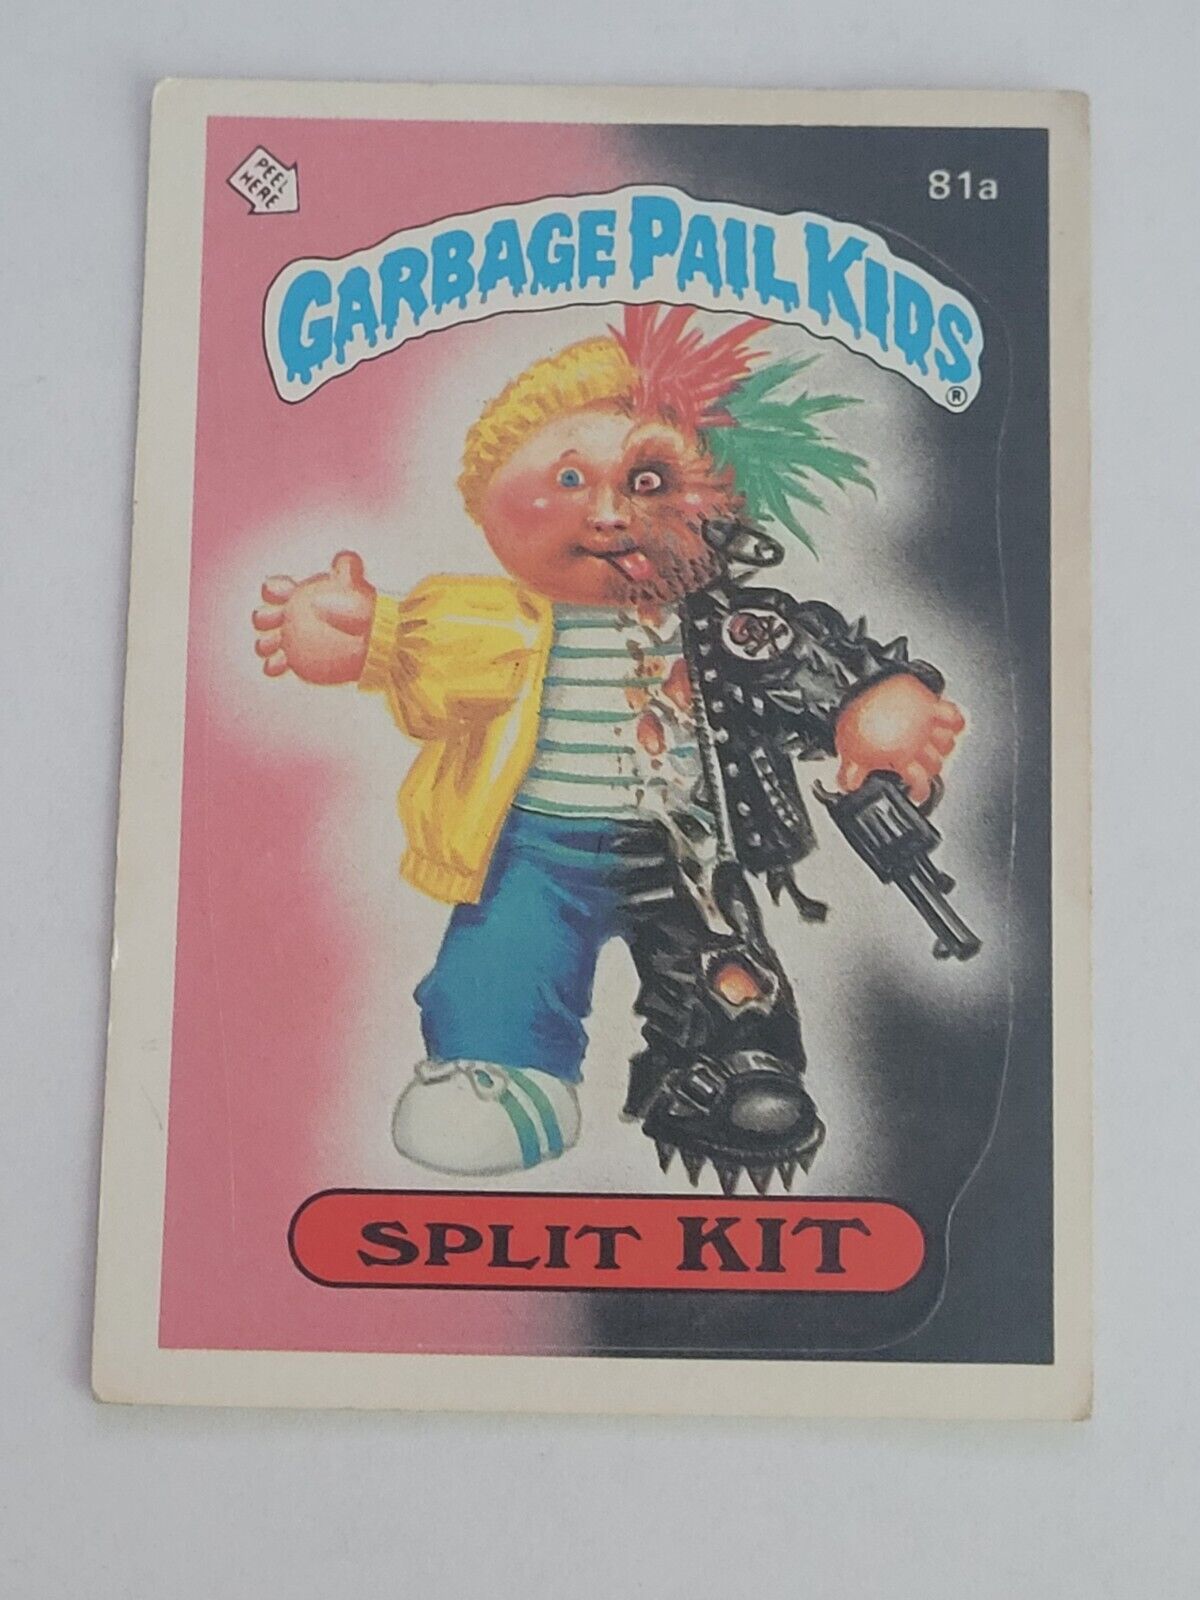 1985 Topps Garbage Pail Kids Original 2nd Series Card #81a SPLIT KIT Vintage GPK